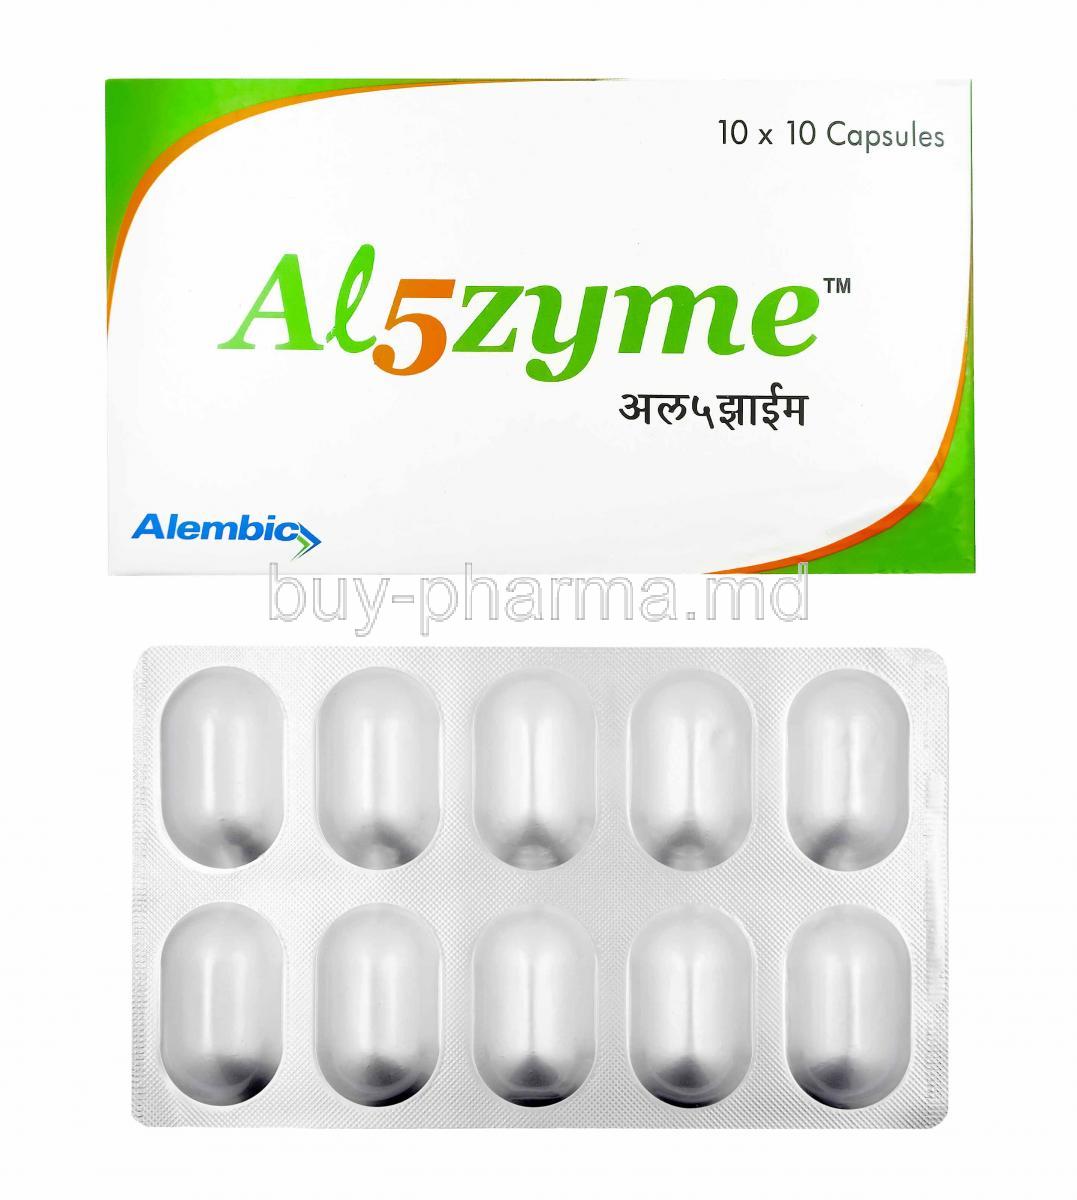 AL5Zyme box and capsules